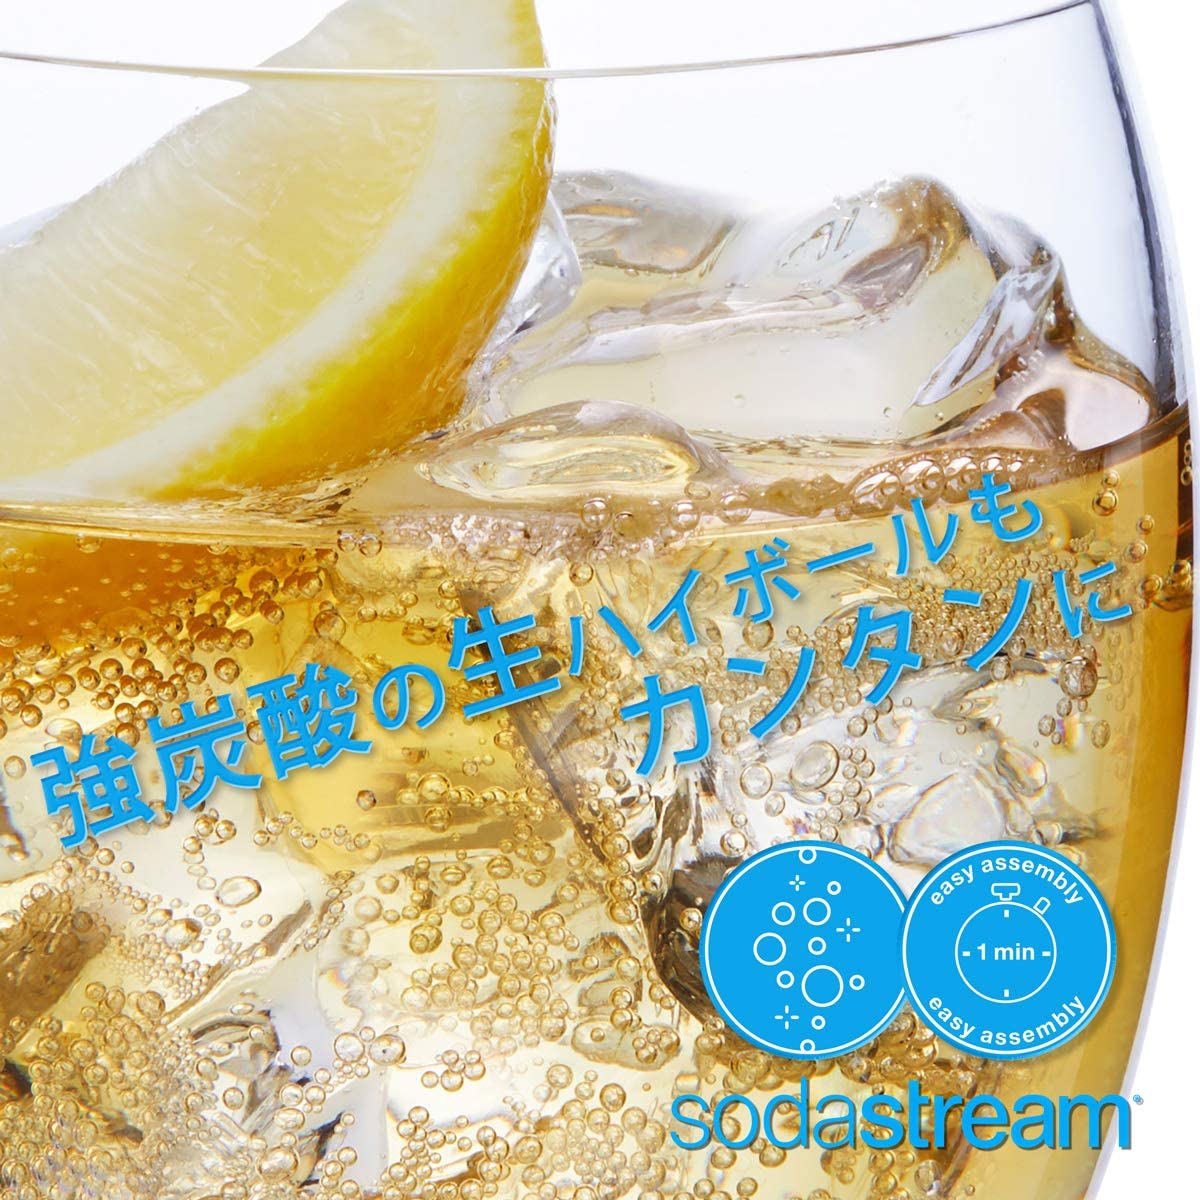 sodastream(ソーダストリーム) ソース v3 スターターキットの商品画像7 